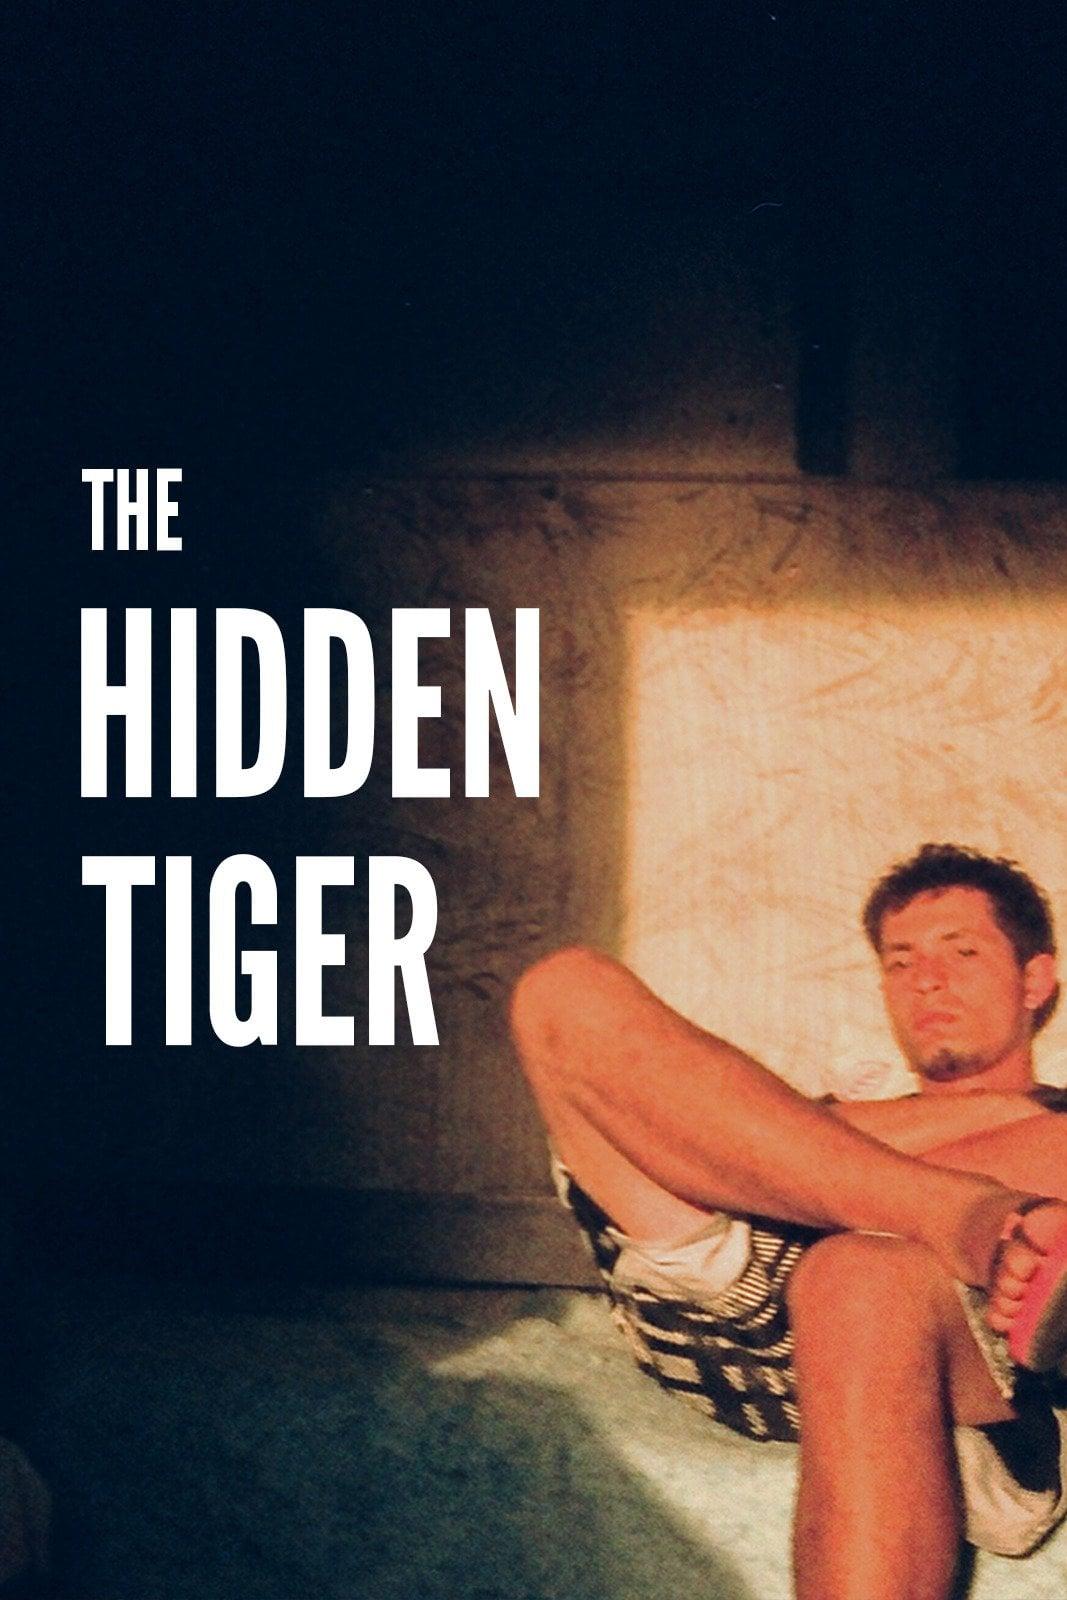 The Hidden Tiger poster